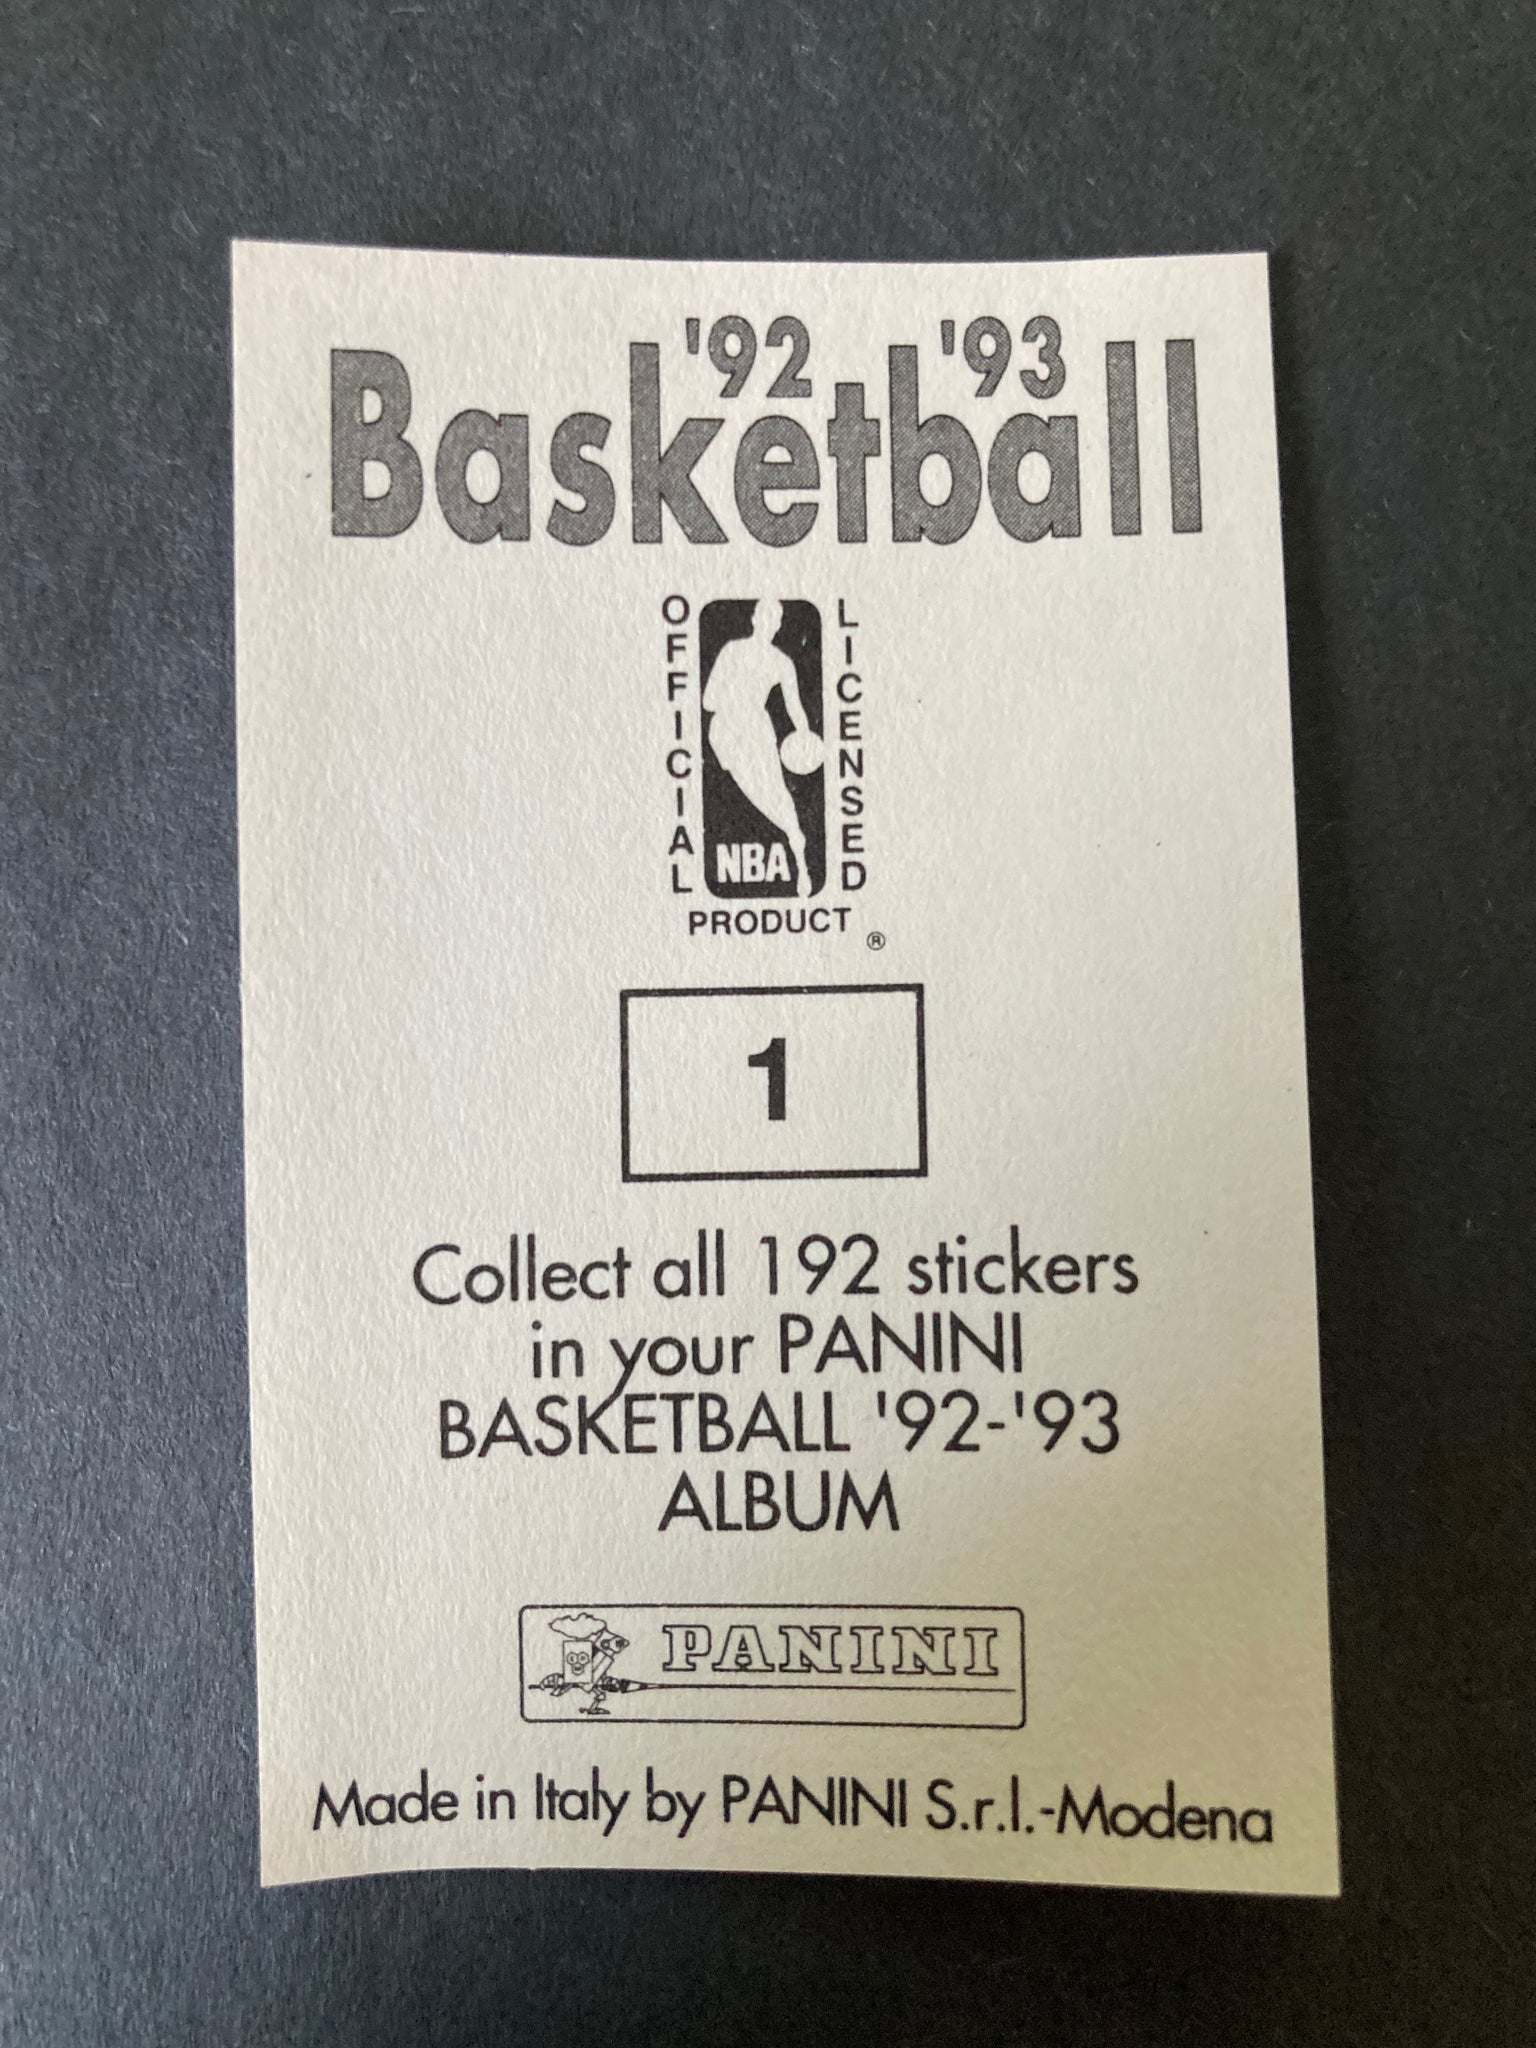 Shaquille O'Neal #1 1992/93 Panini Sticker Orlando Magic Rookie